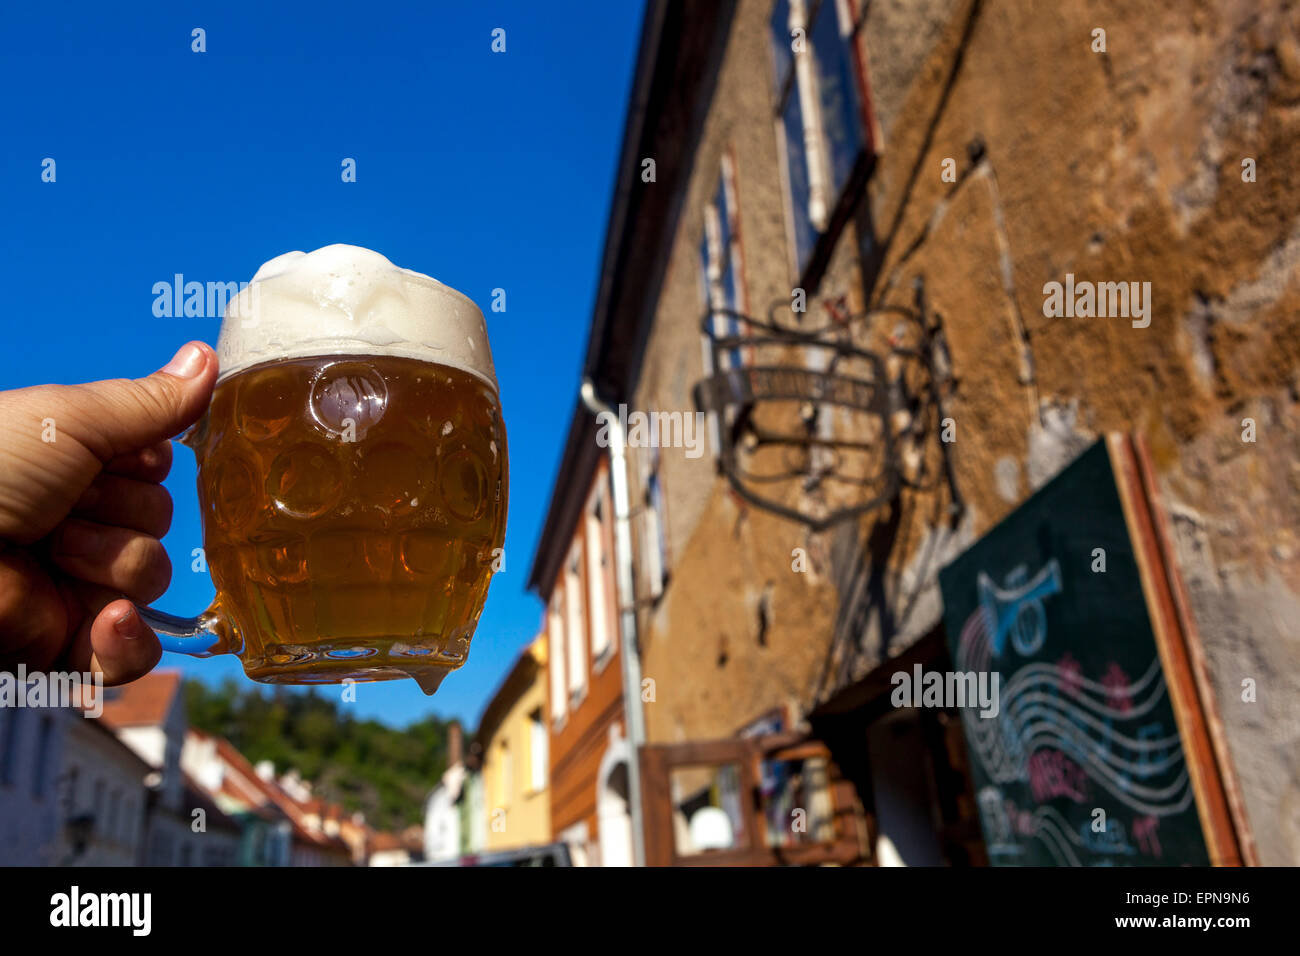 Jewish Quarter Trebic UNESCO Czech Republic, freshly poured beer in front of a bar Trumpetka, Czech Republic Stock Photo